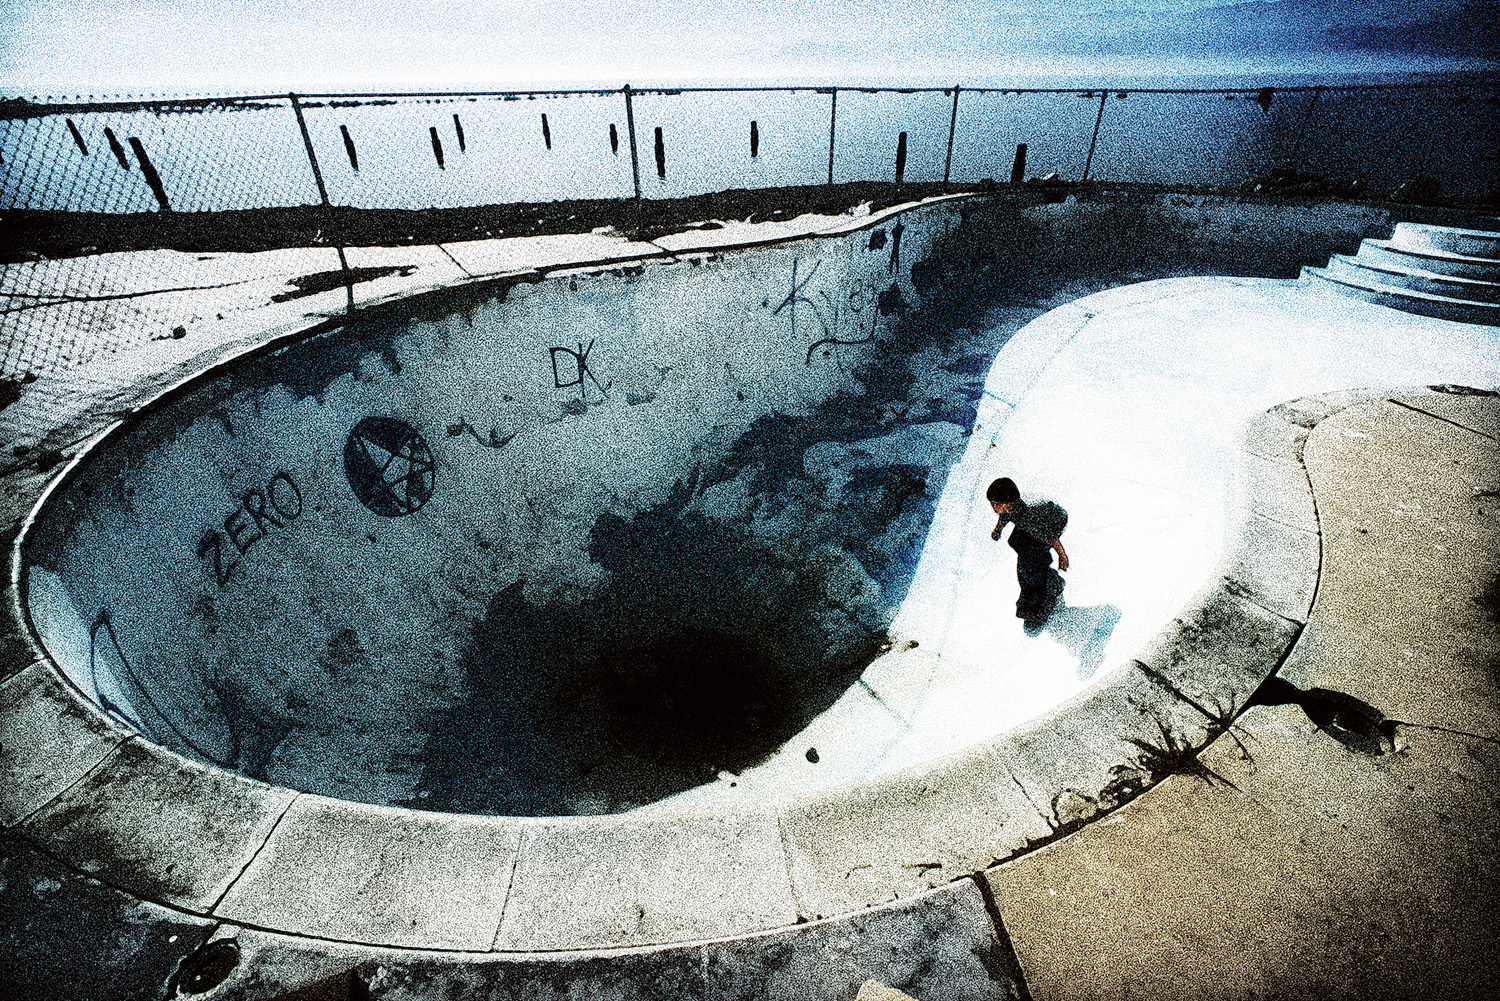 Gritty lifestyle photo of boy skateboarding on side of empty urban pool